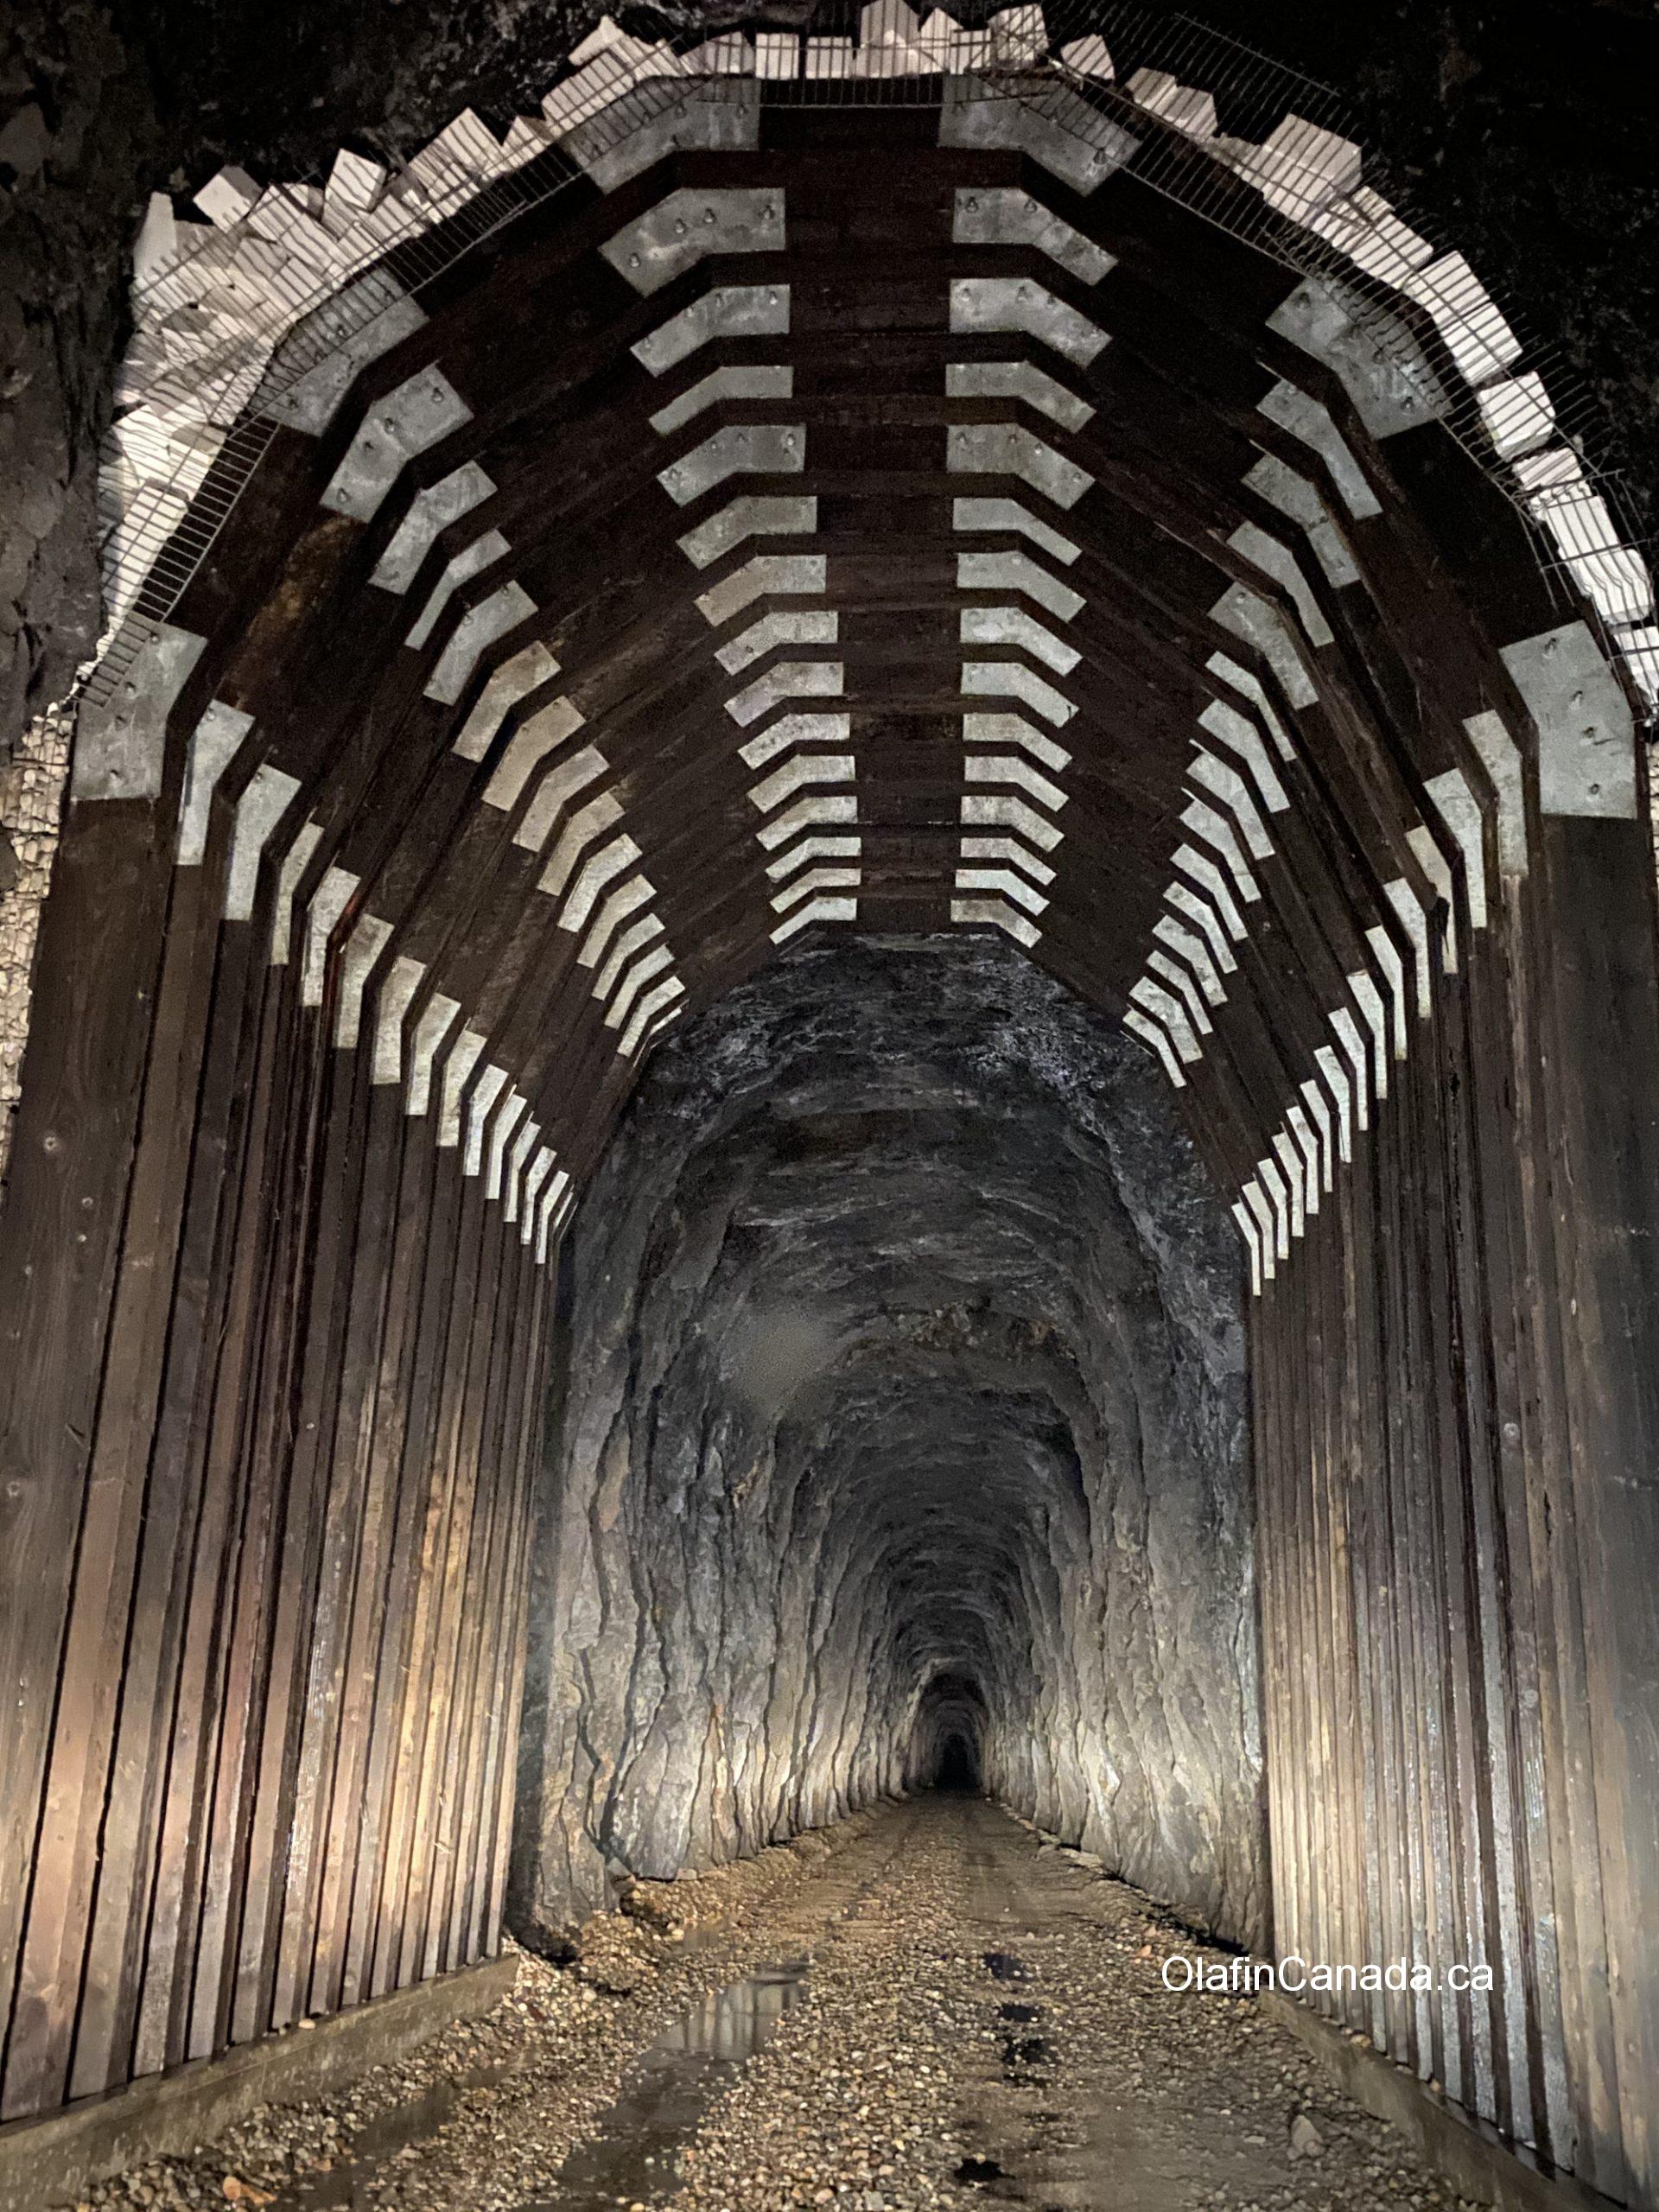 Bulldog Tunnel (912 meters long) on the Columbia Western Railway in the Kootenays #olafincanada #britishcolumbia #discoverbc #abandonedbc #bulldogtunnel #kootenays